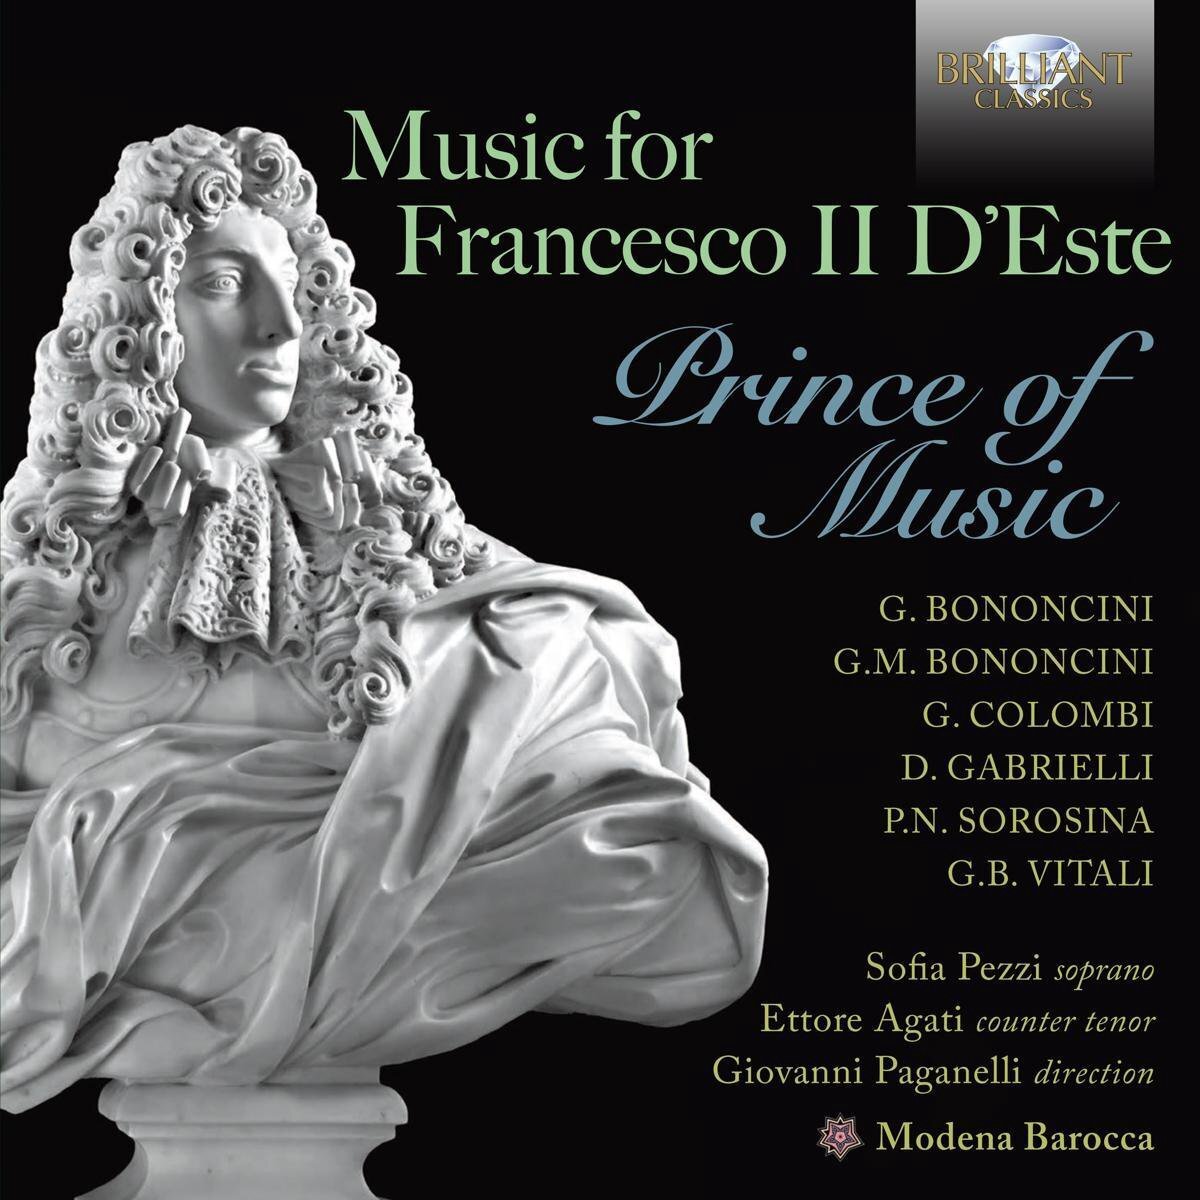 Brilliant Classics MUSIC FOR FRANCESCO 2 D ESTE